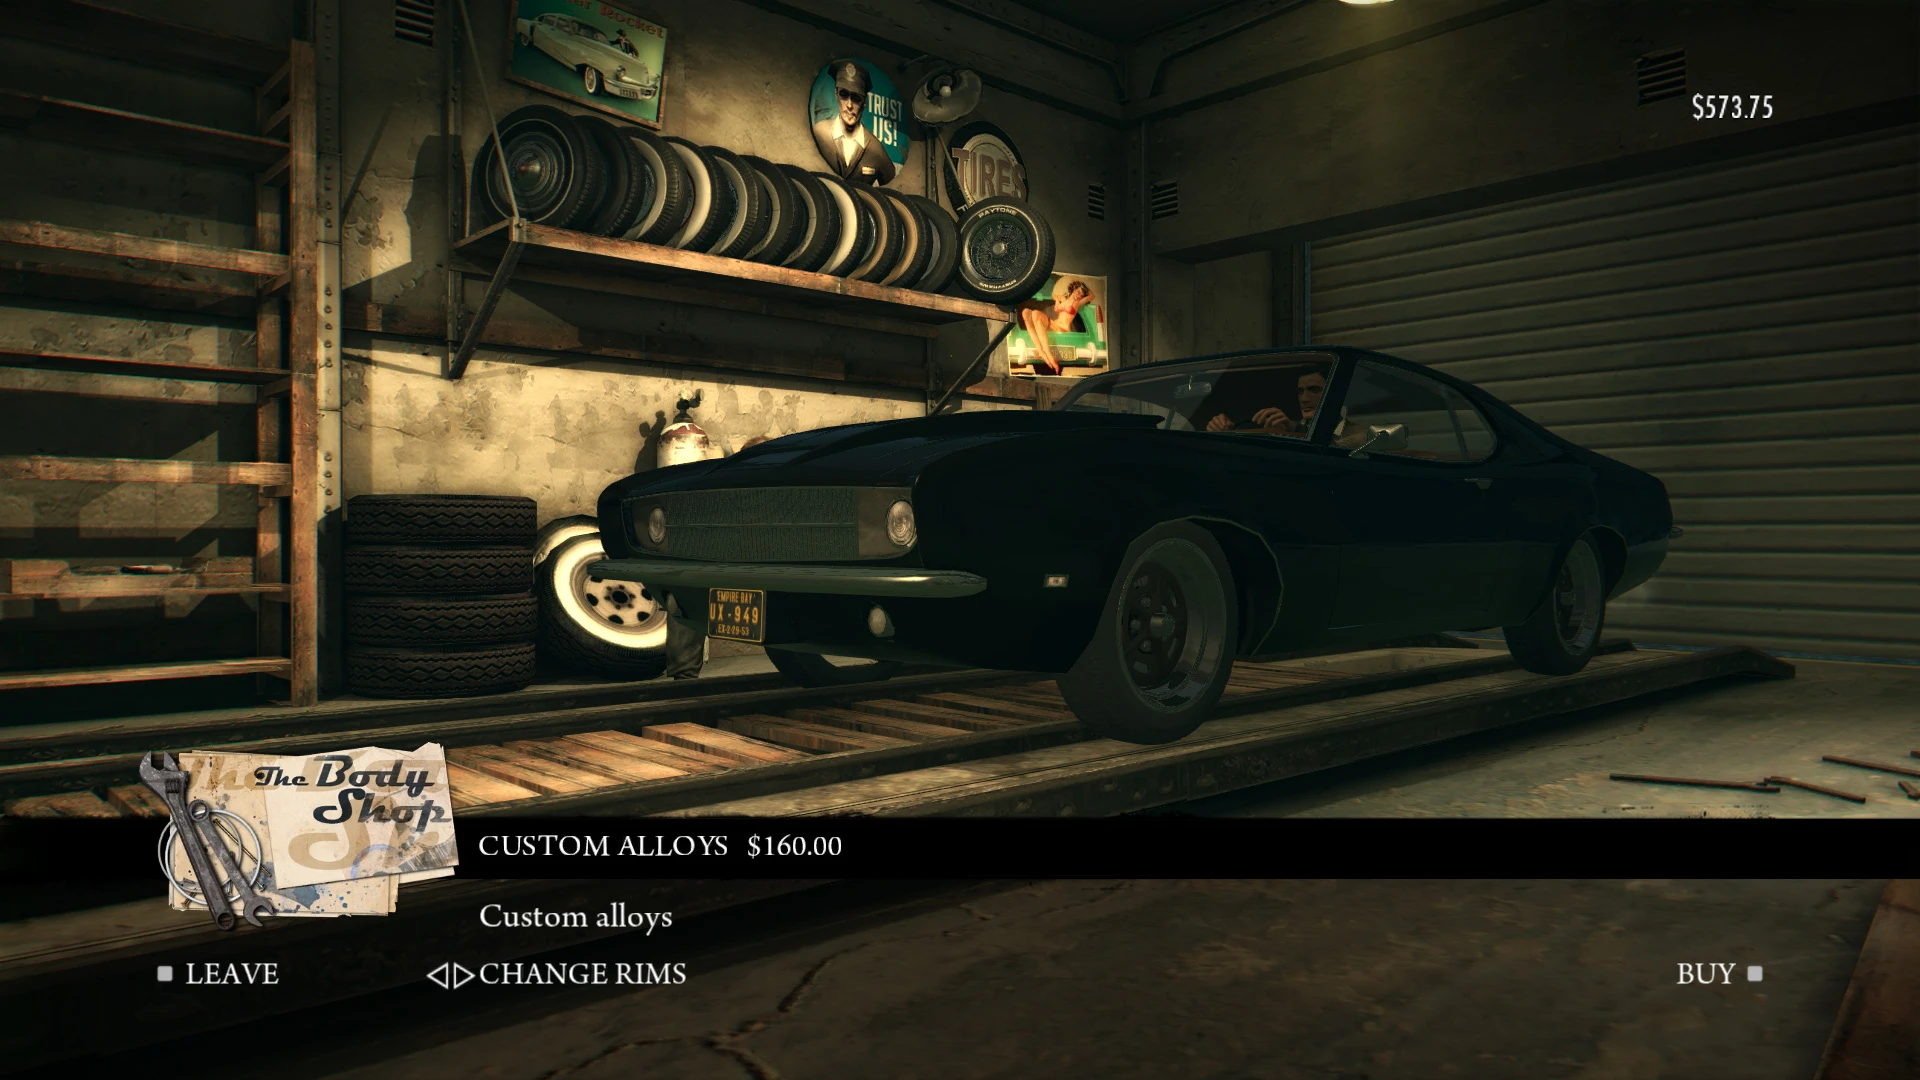 Steam Community :: Video :: Mafia 3: Modern Cars (mod)